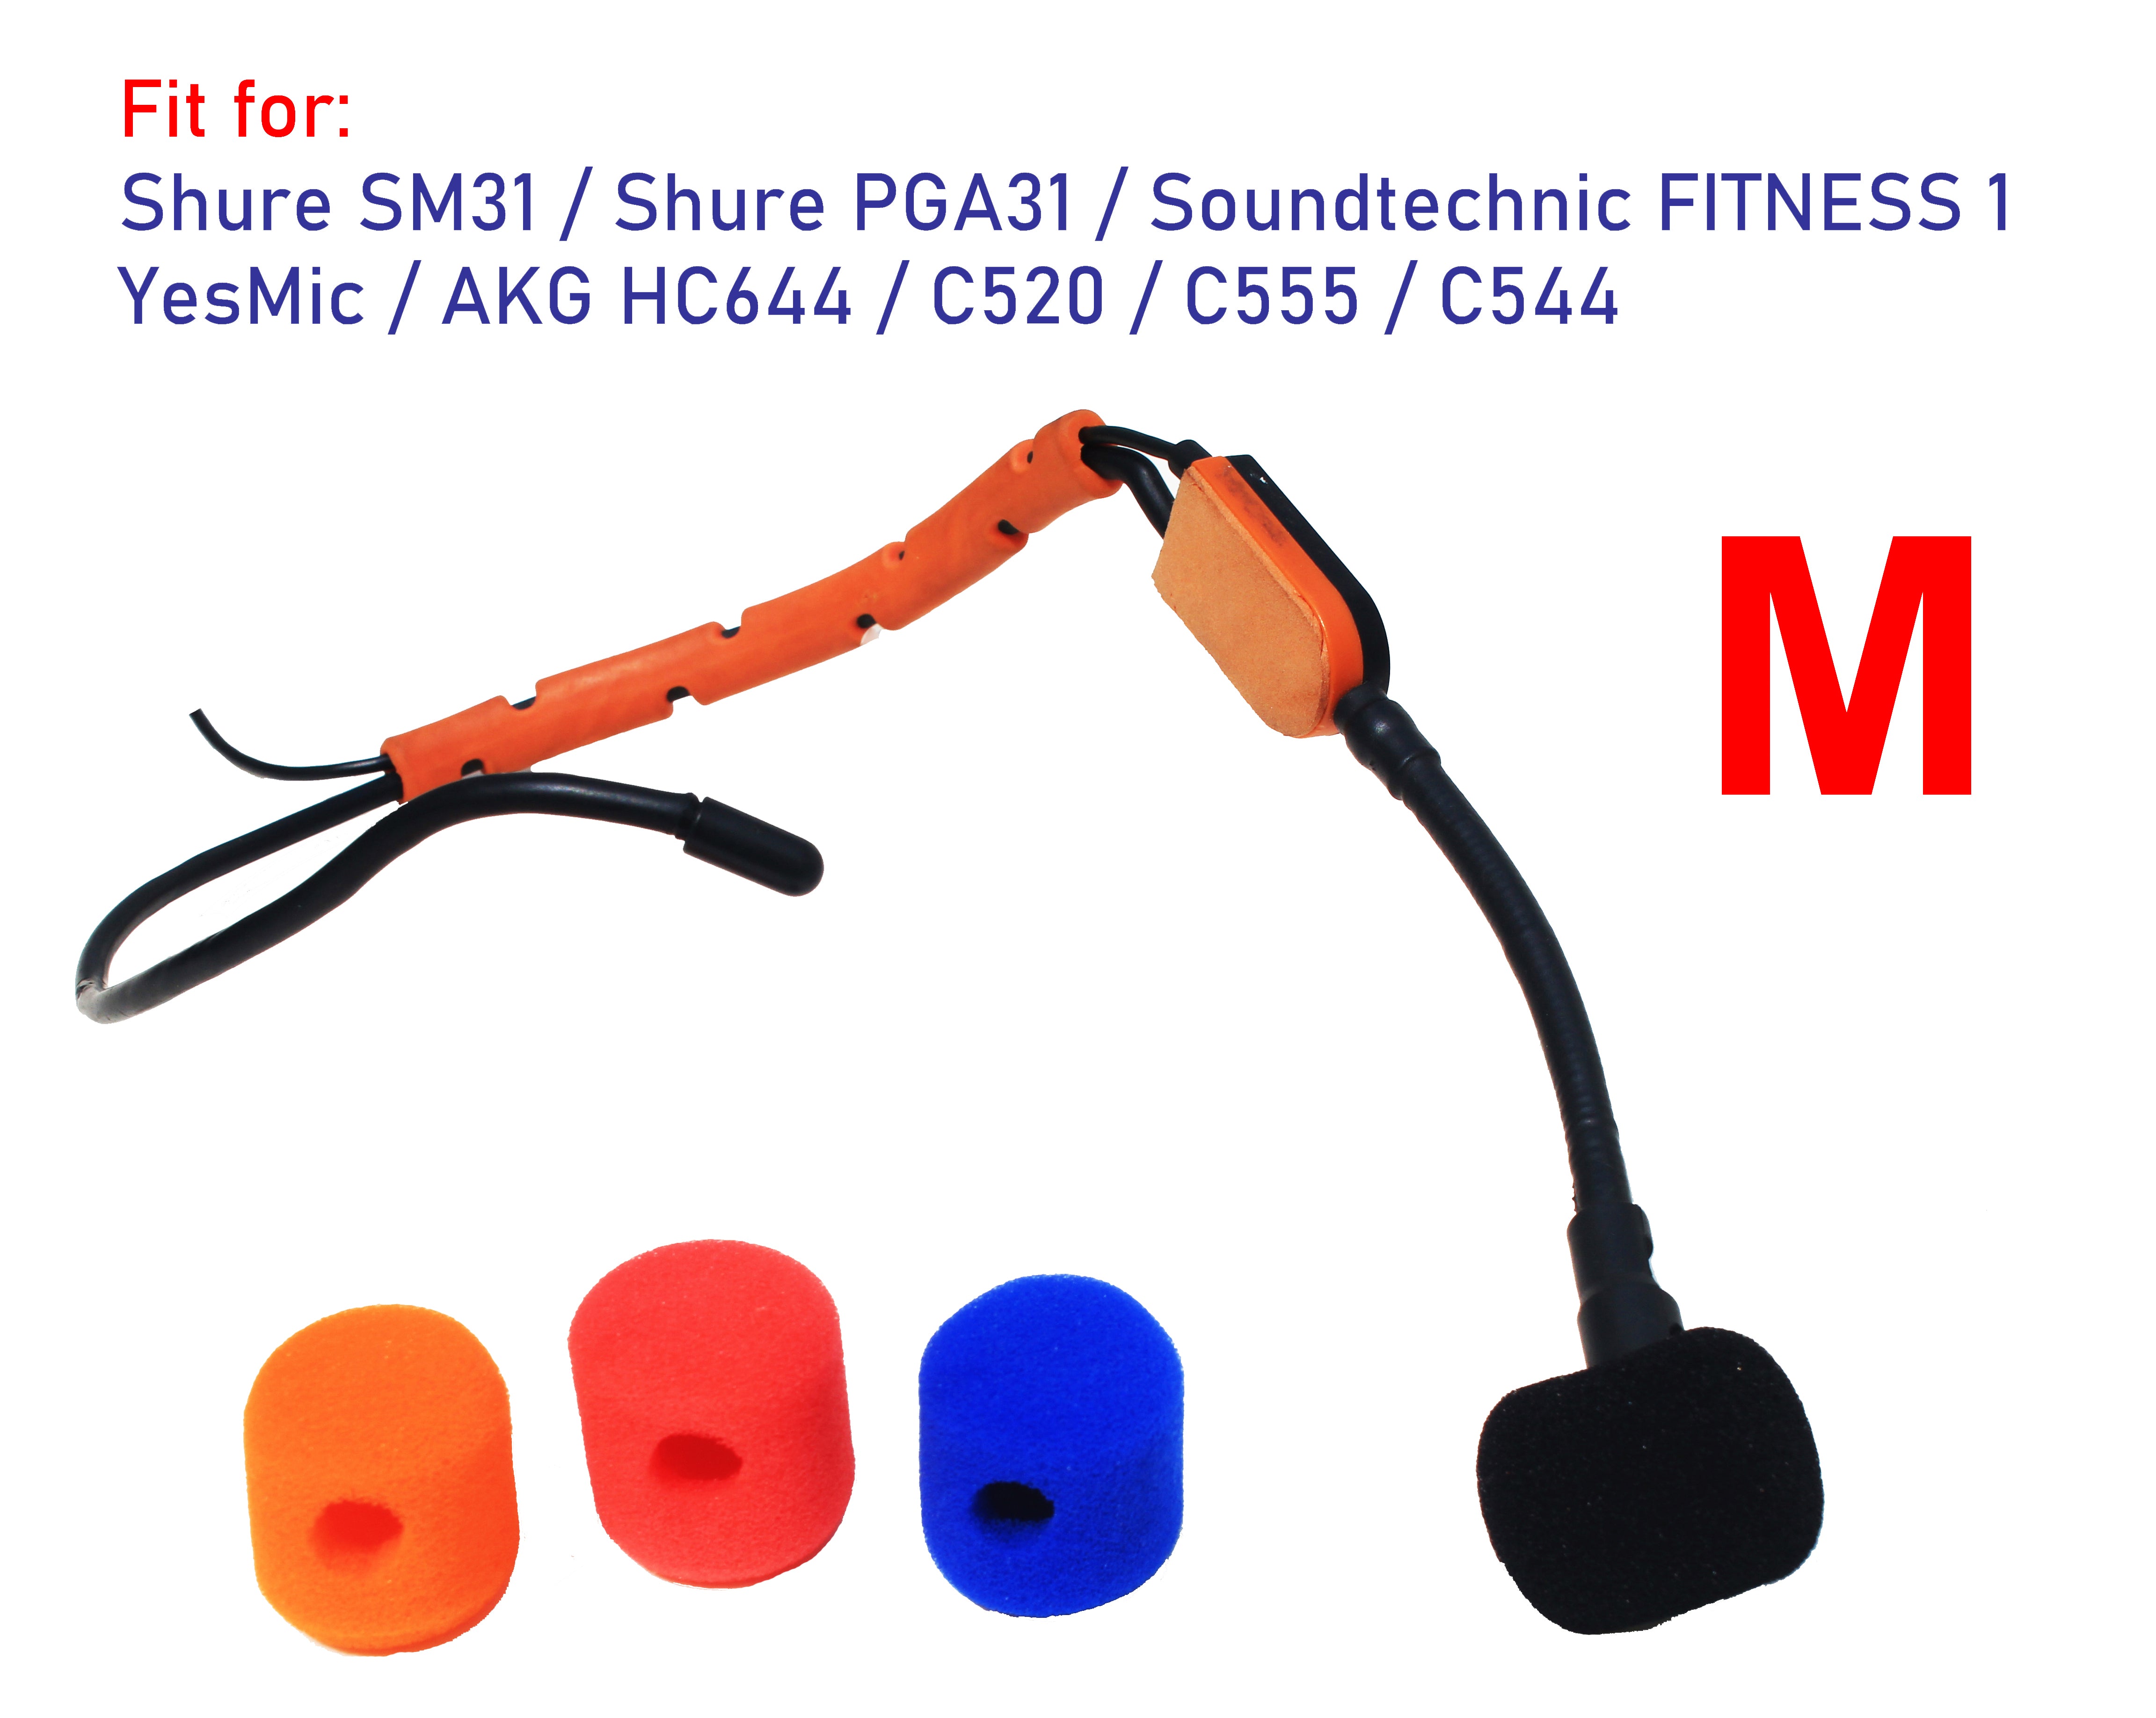 Shure SM31 PGA31 / YesMic Soundtechnic FITNESS 1 / AKG HC644 MD / – YesMic.com Fitness Audio Systems